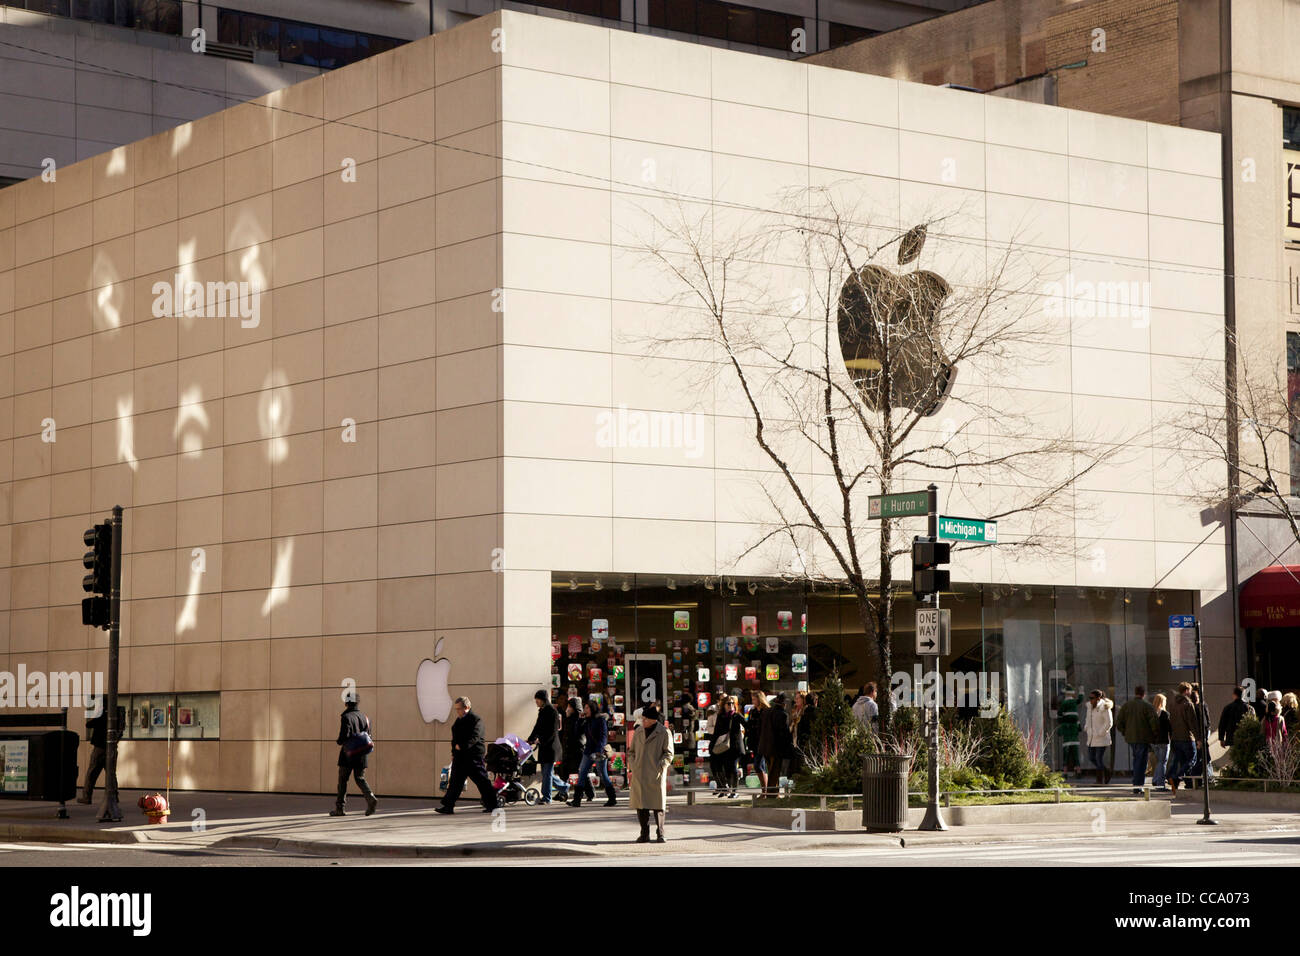 Chicago's new Apple store - City